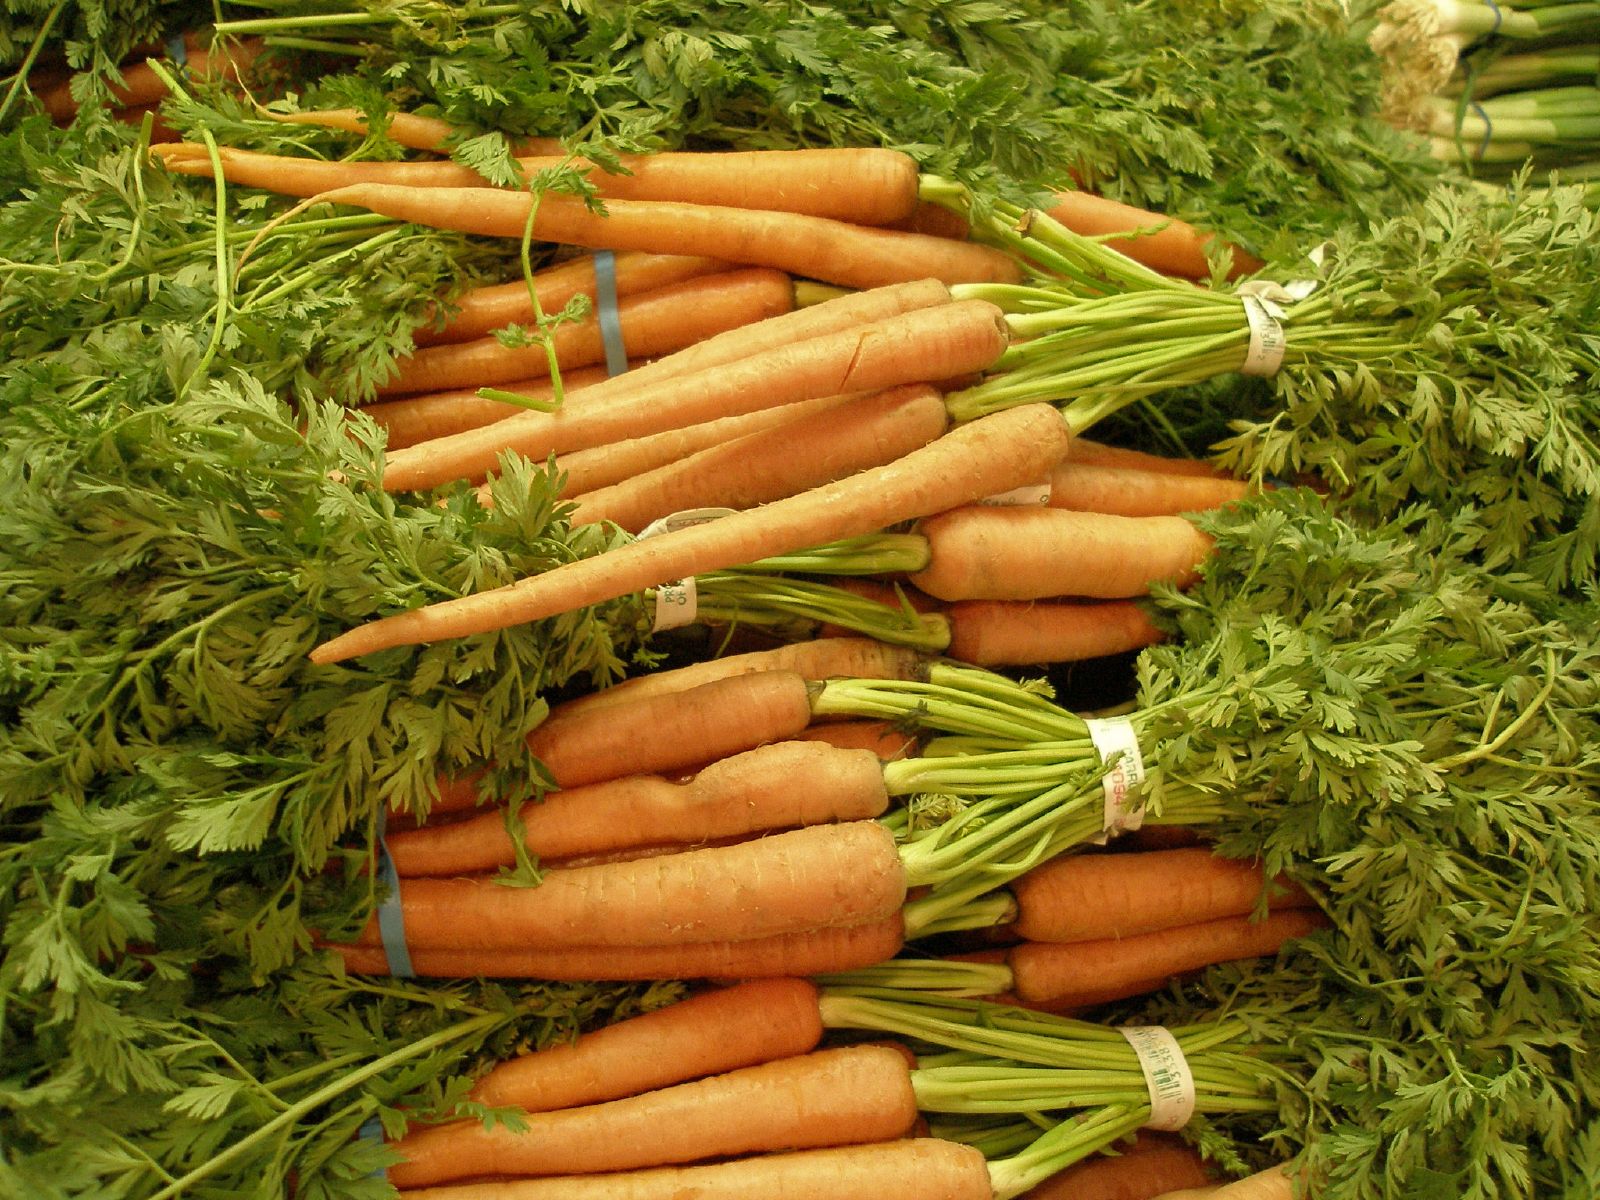 Food Scraps into New Vegetables